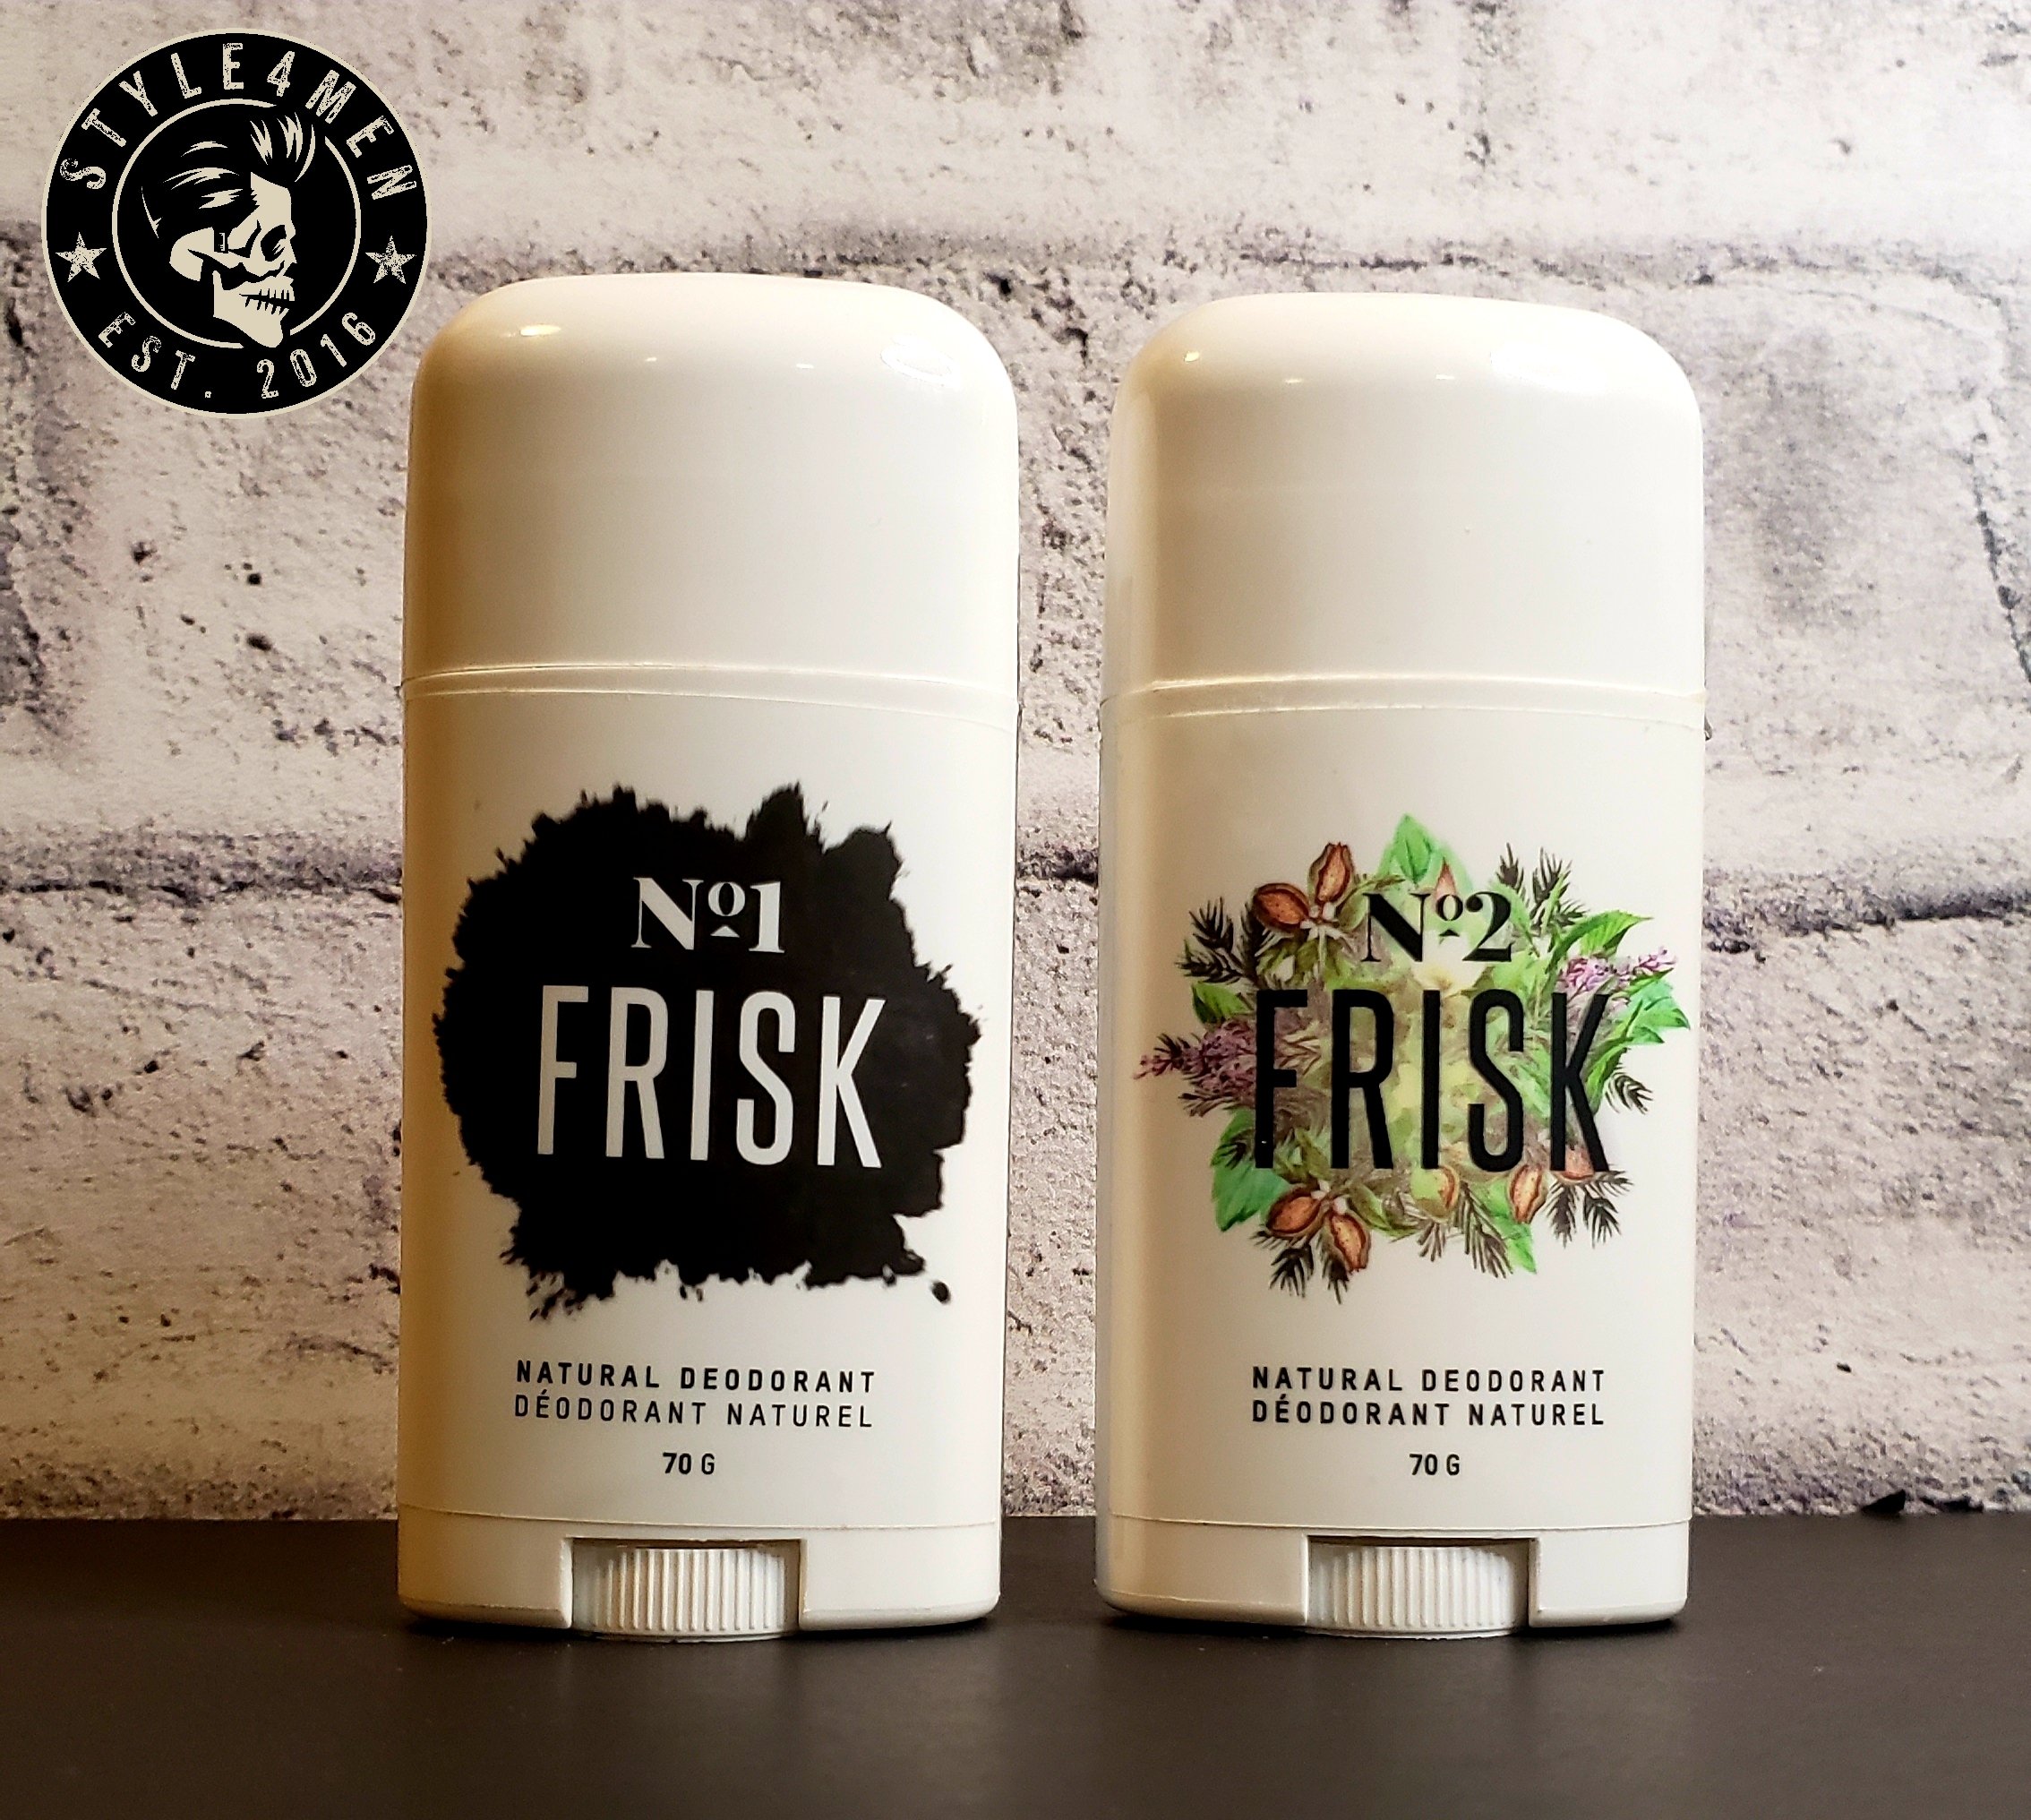 FRISK Natural Deodorant